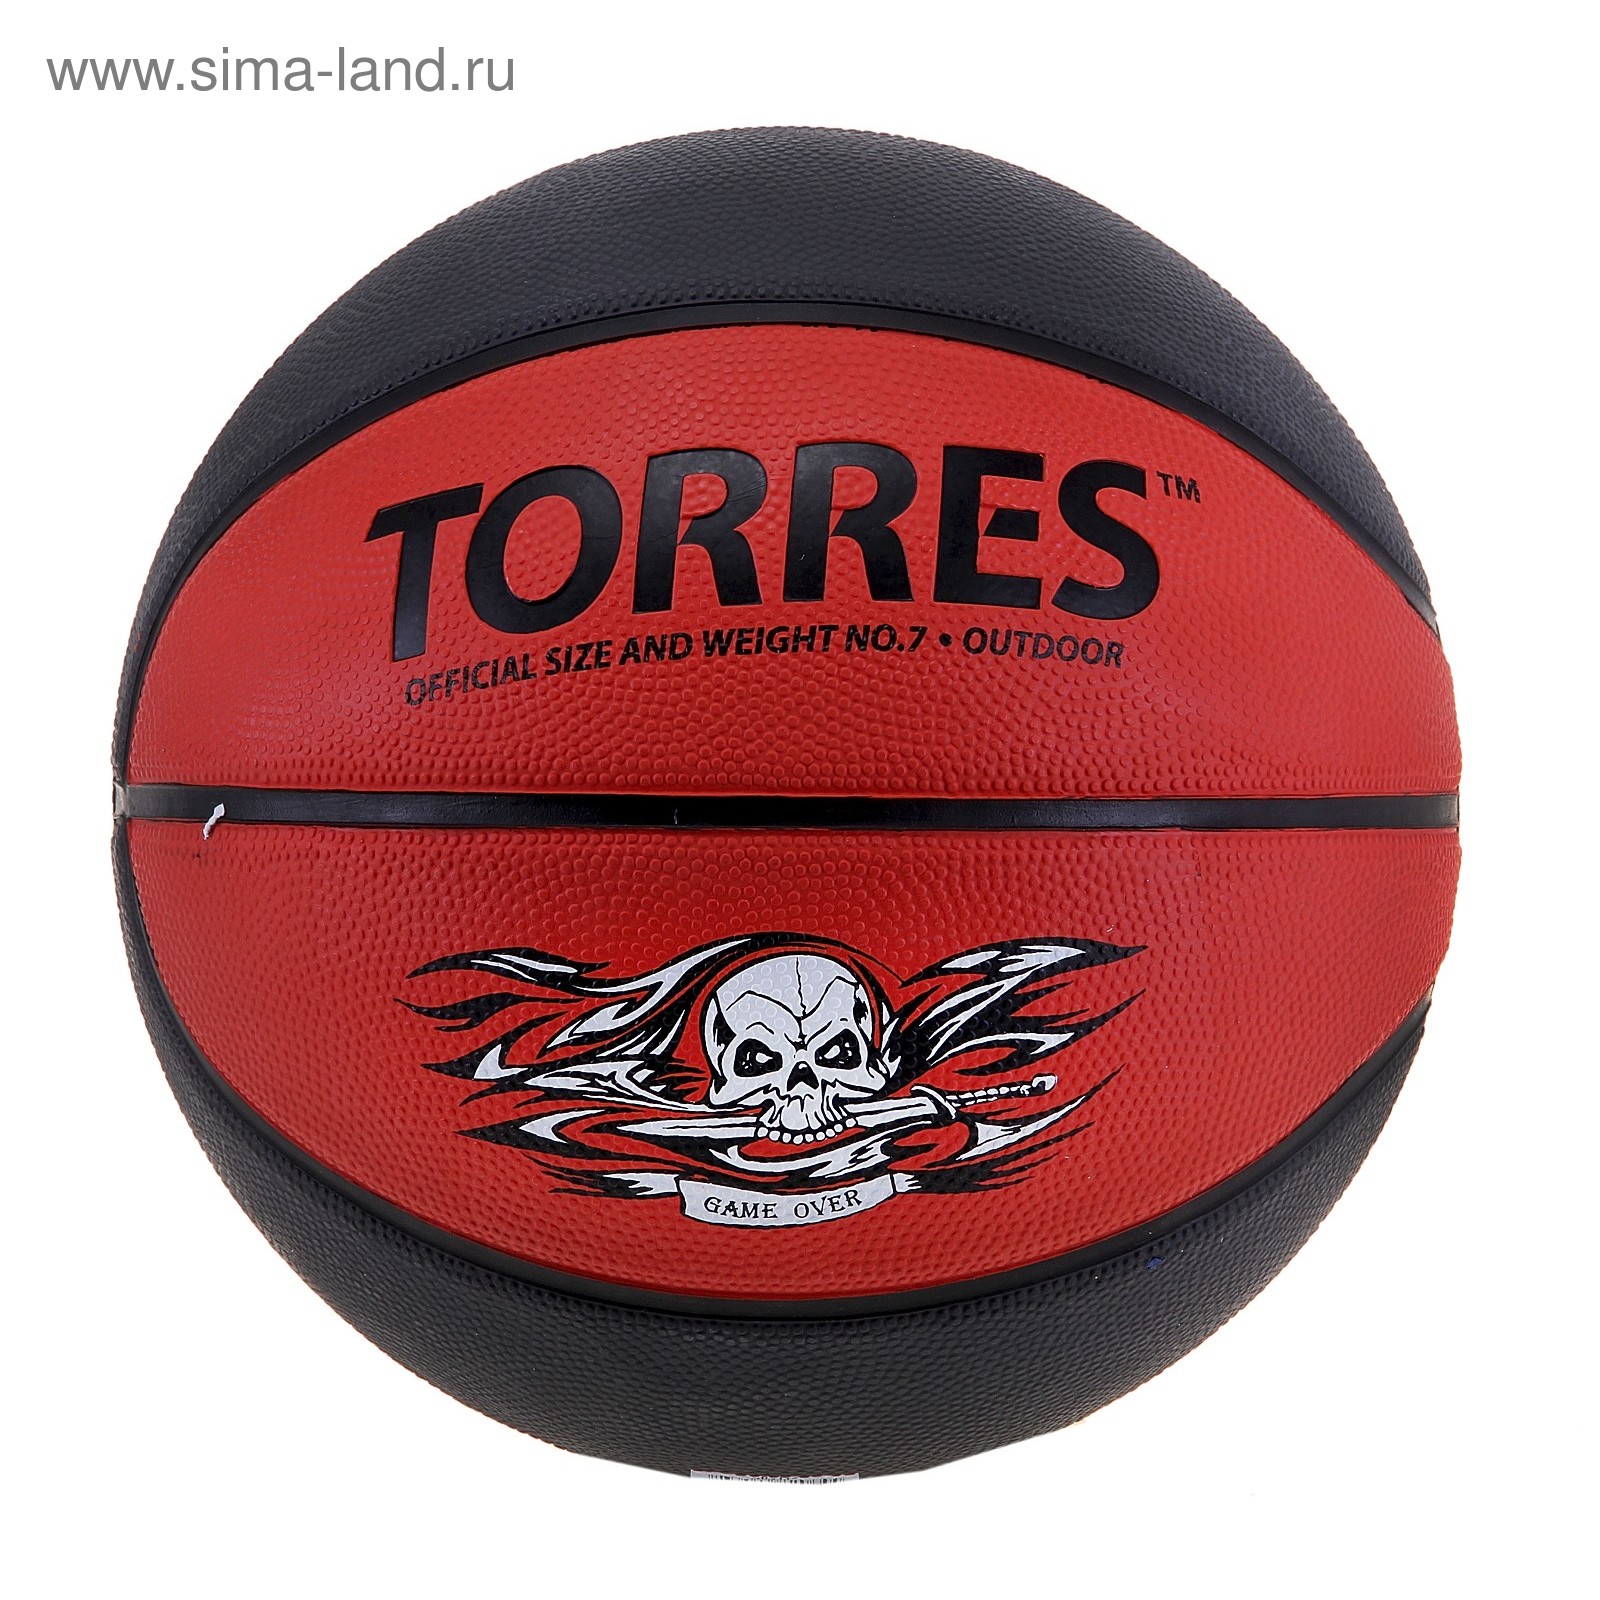 Мяч баскетбольный Torres Game Over, B00117, размер 7